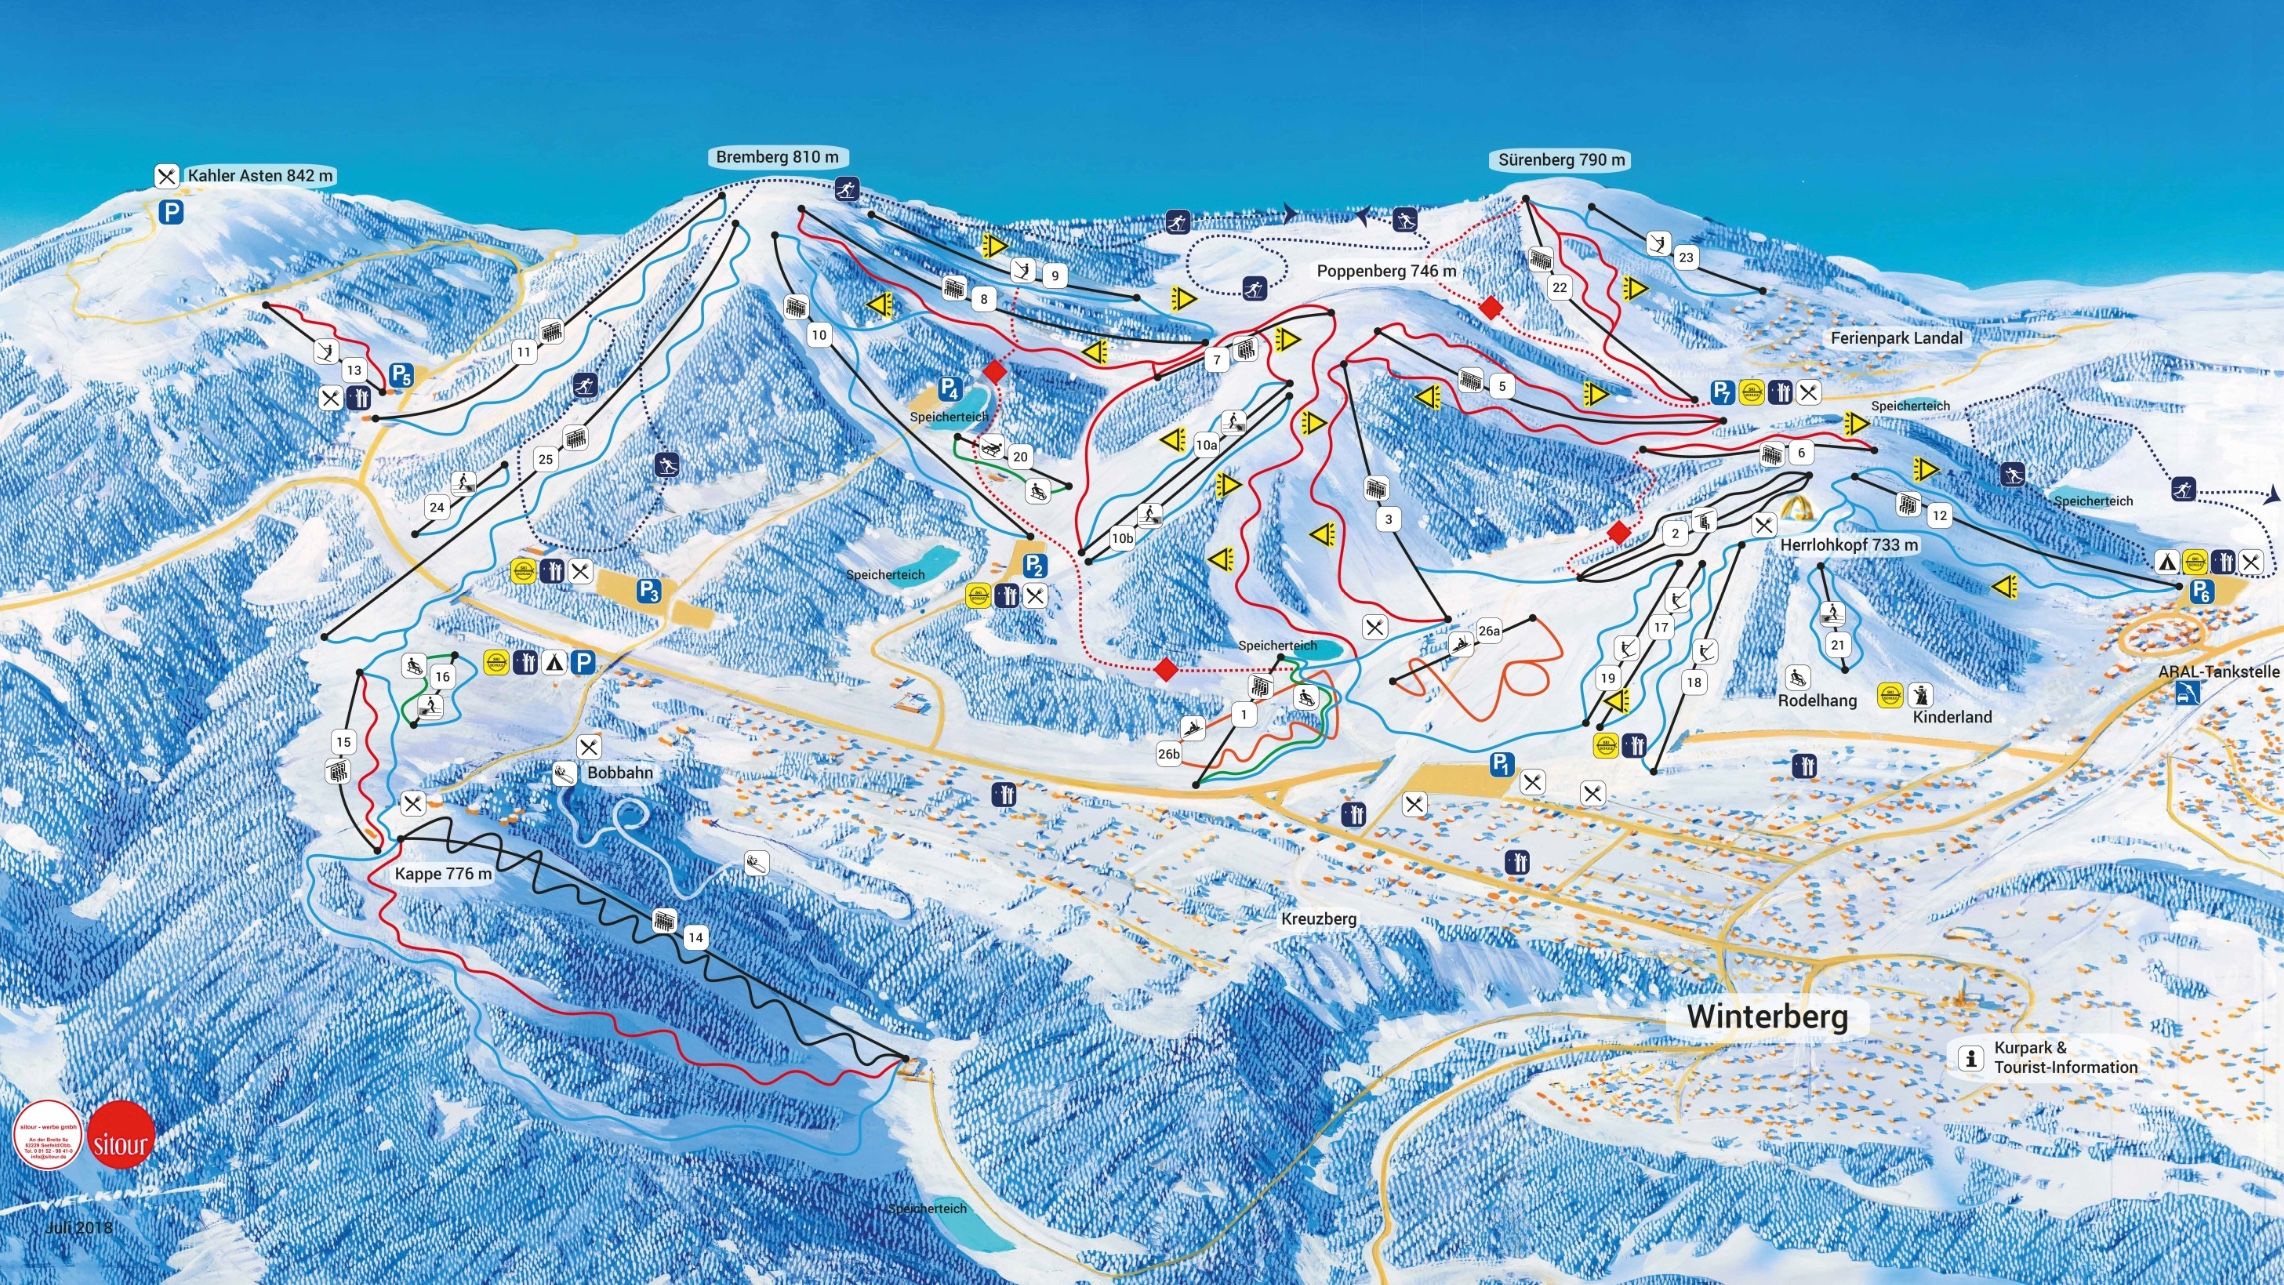 Skiliftkarussell Winterberg - skigebied met 27km piste in Duitsland